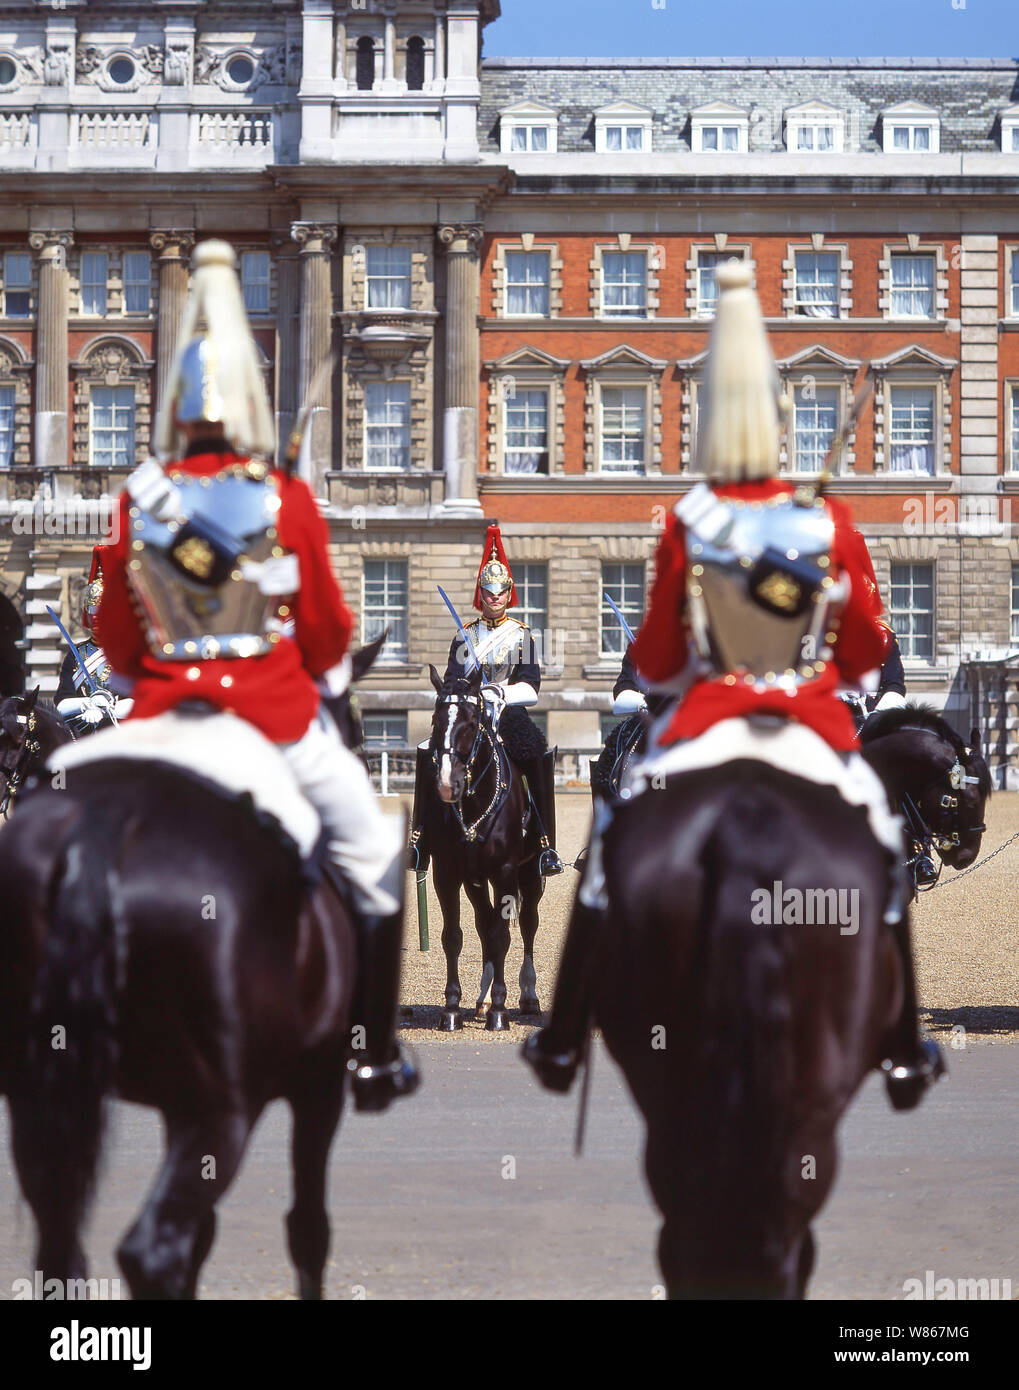 Wachablösung, Parade der Horse Guards, Whitehall, City of Westminster, Greater London, England, Großbritannien Stockfoto